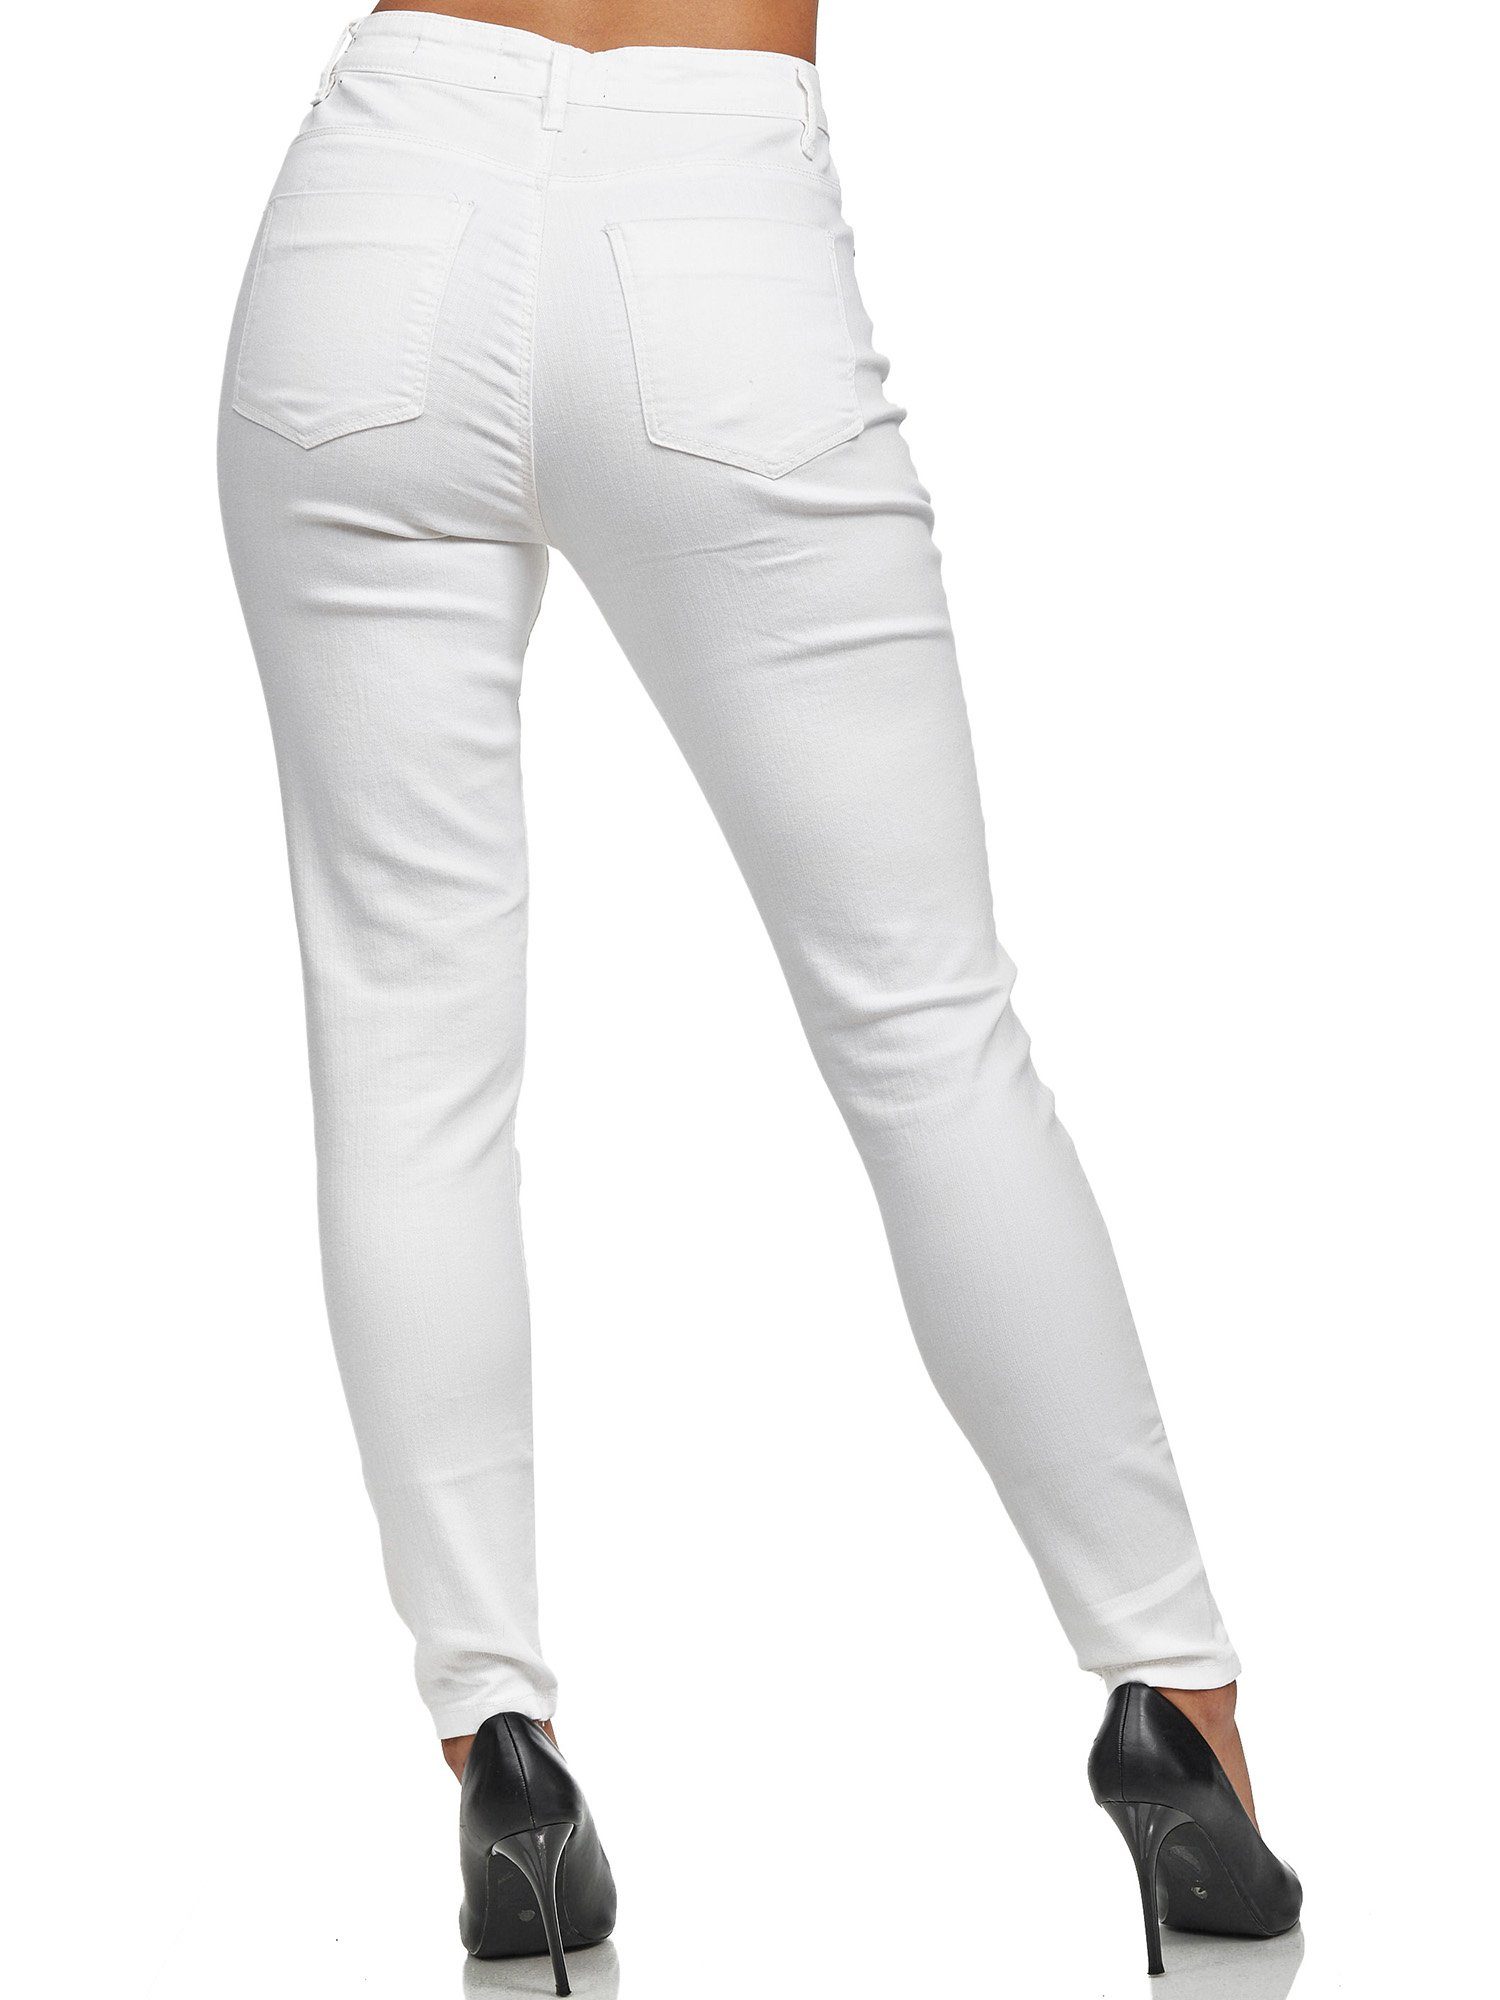 Tazzio High-waist-Jeans F101 Damen Skinny Jeanshose Fit weiß